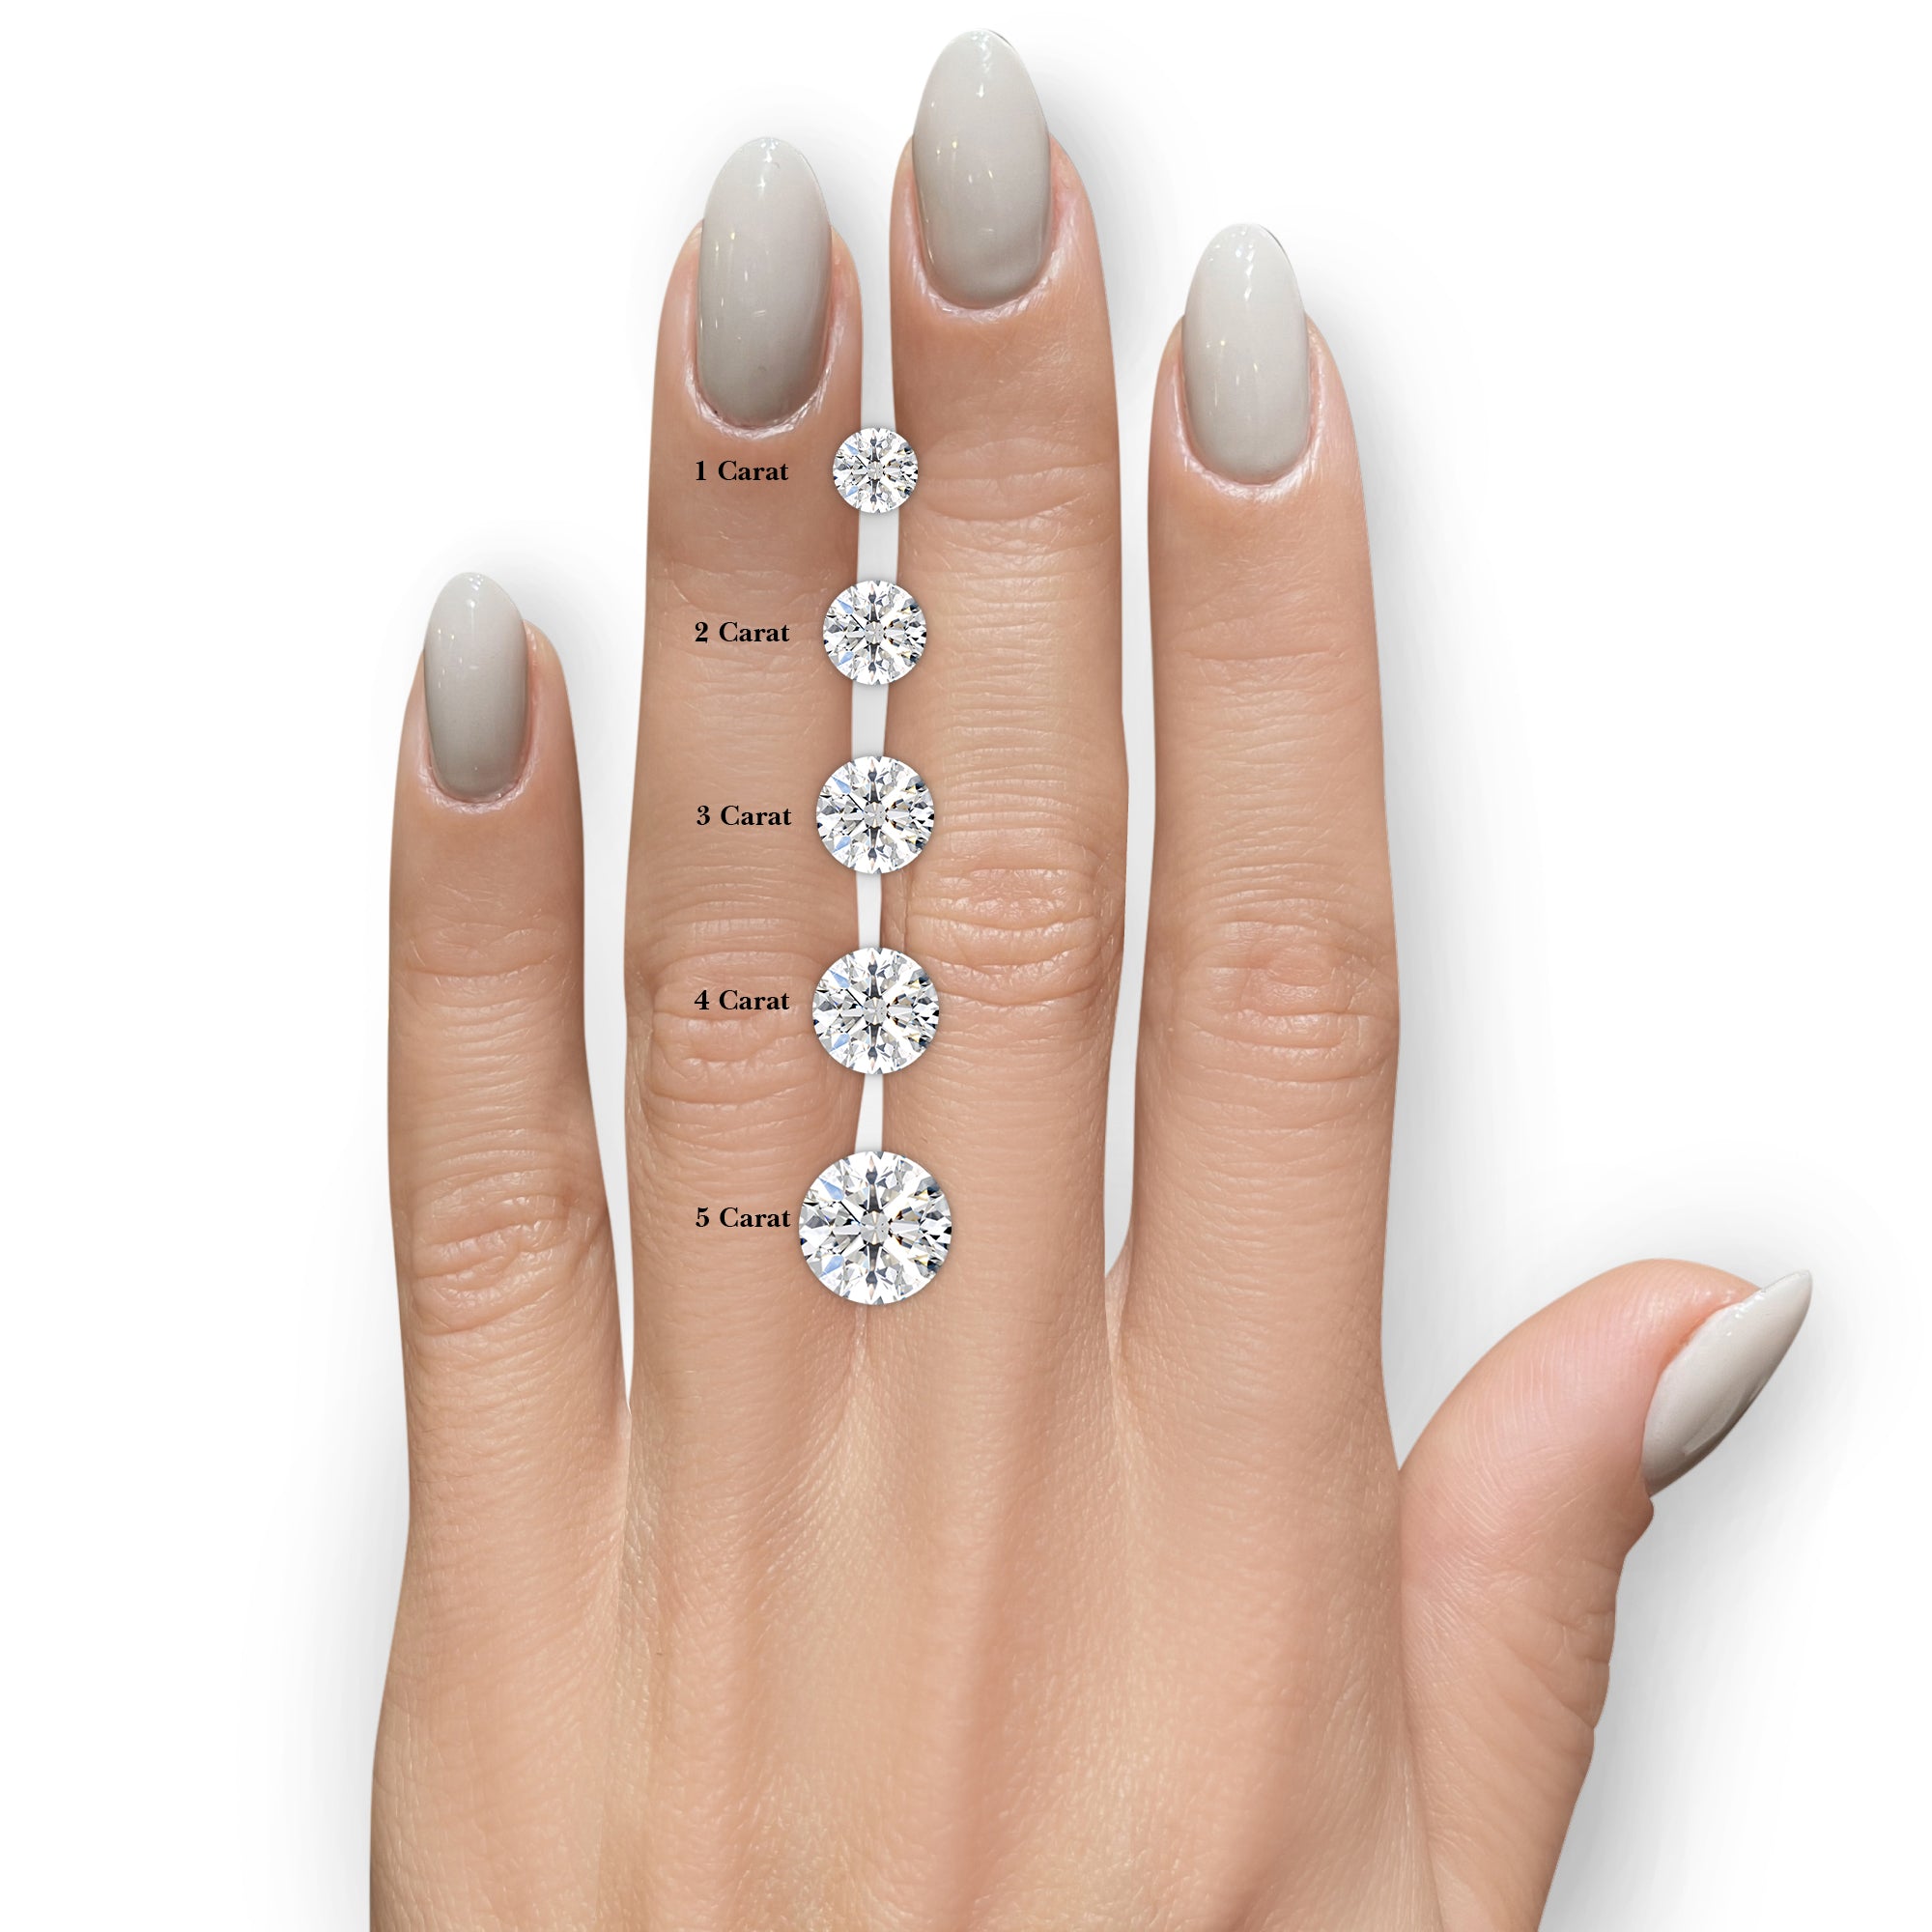 Asia Moissanite & Diamonds Ring -14K White Gold